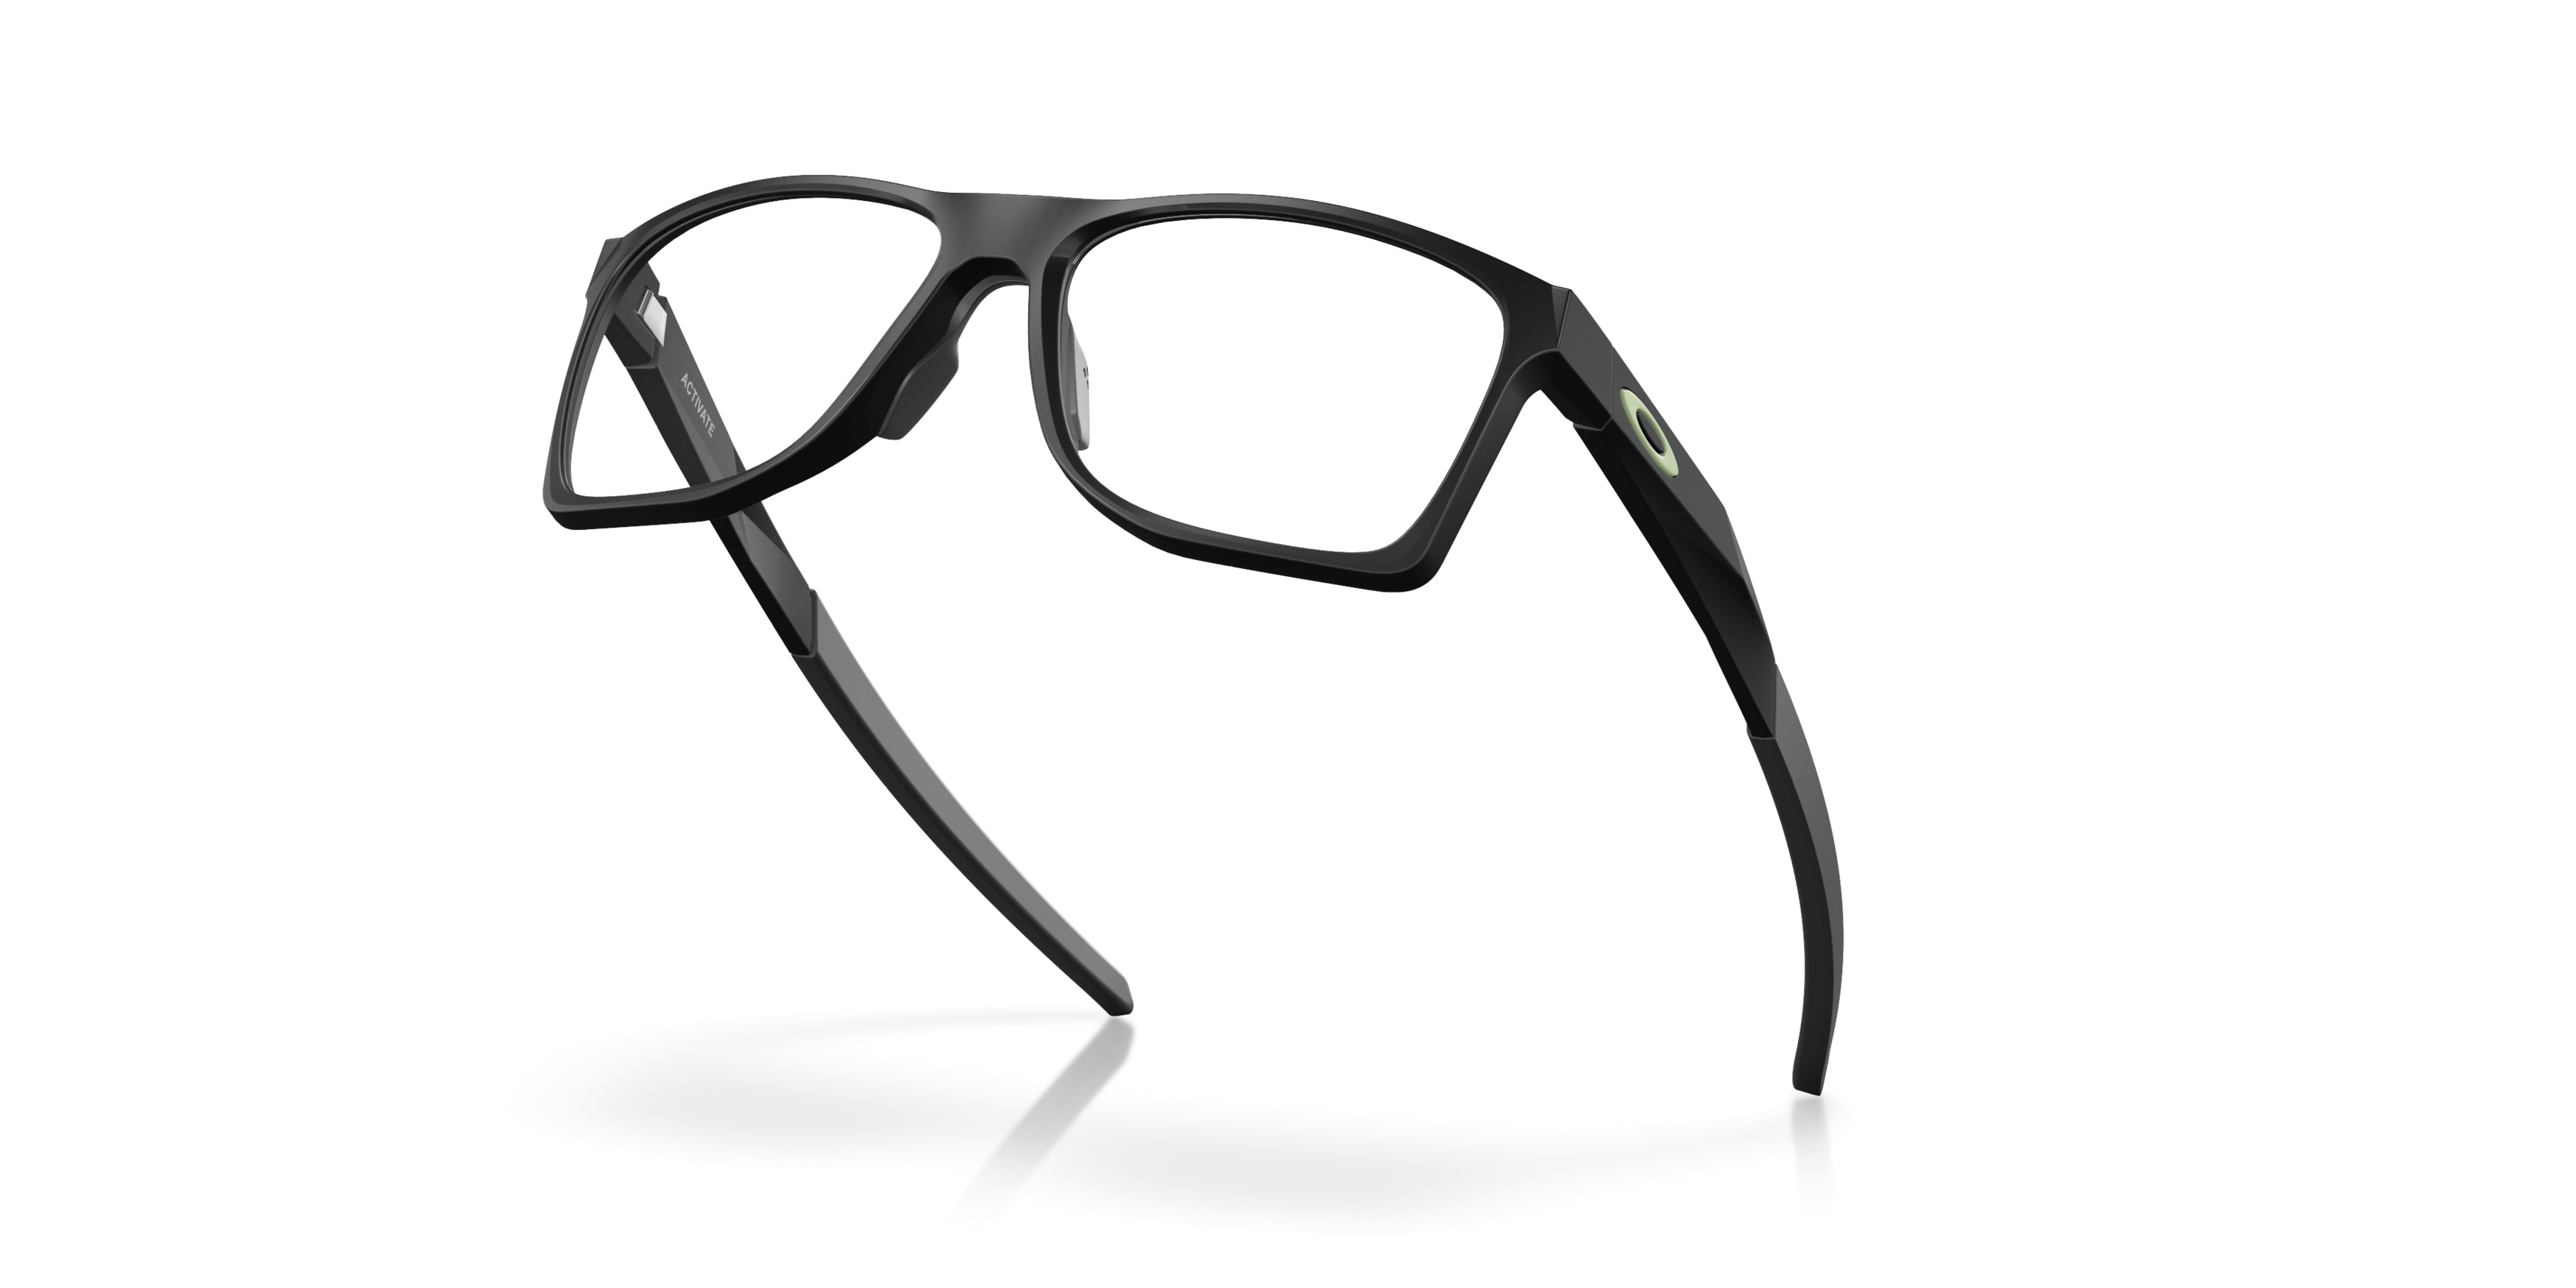 Bottom_Up Oakley Activate OX 8173 Glasses Transparent / transparent, clear